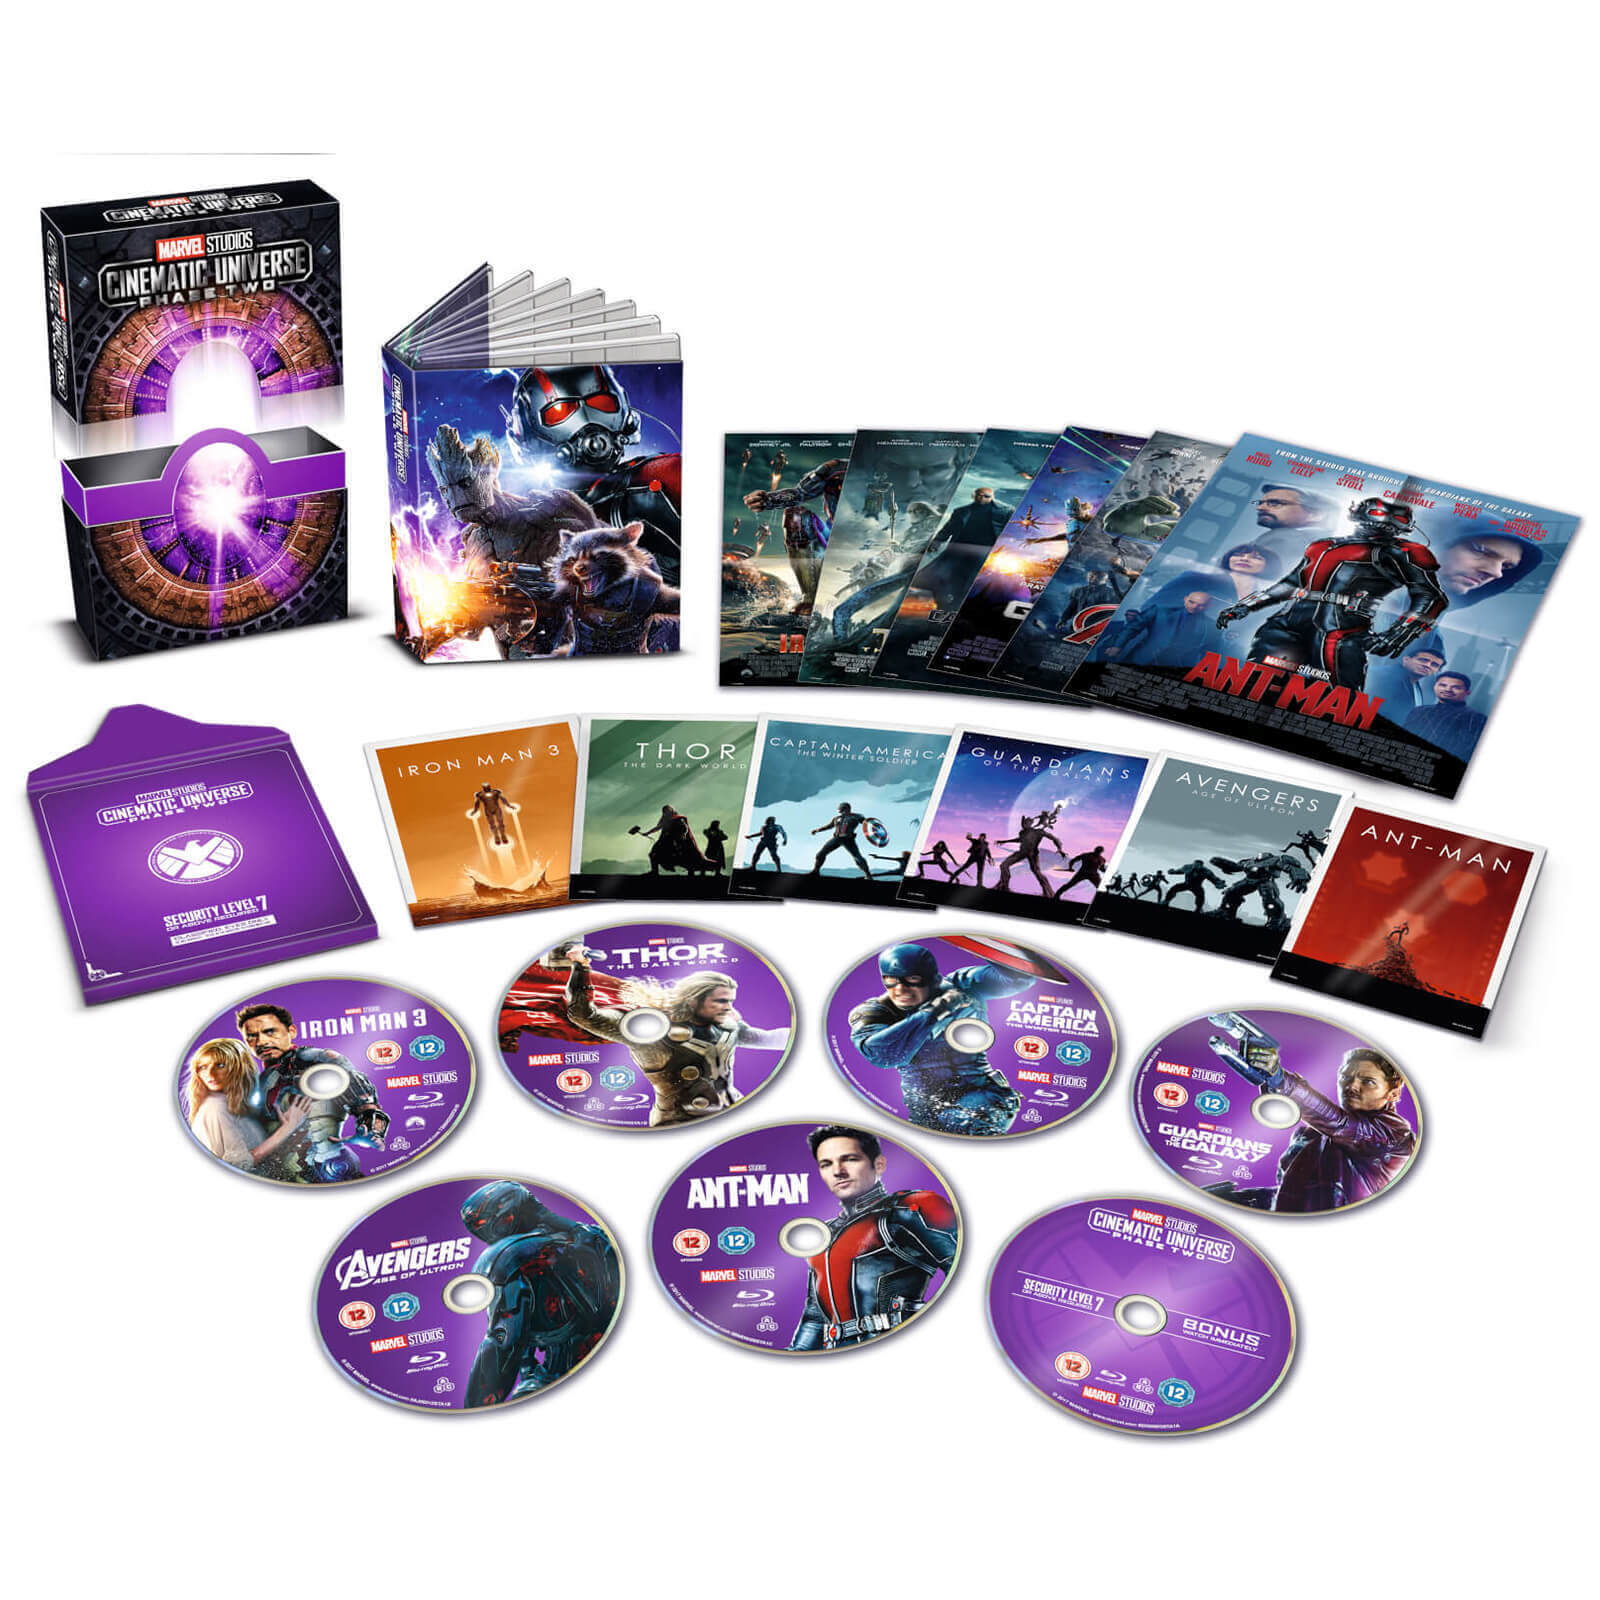 Marvel Studios Box-Set als Sammlerausgabe - Phase 2 von Walt Disney Studios